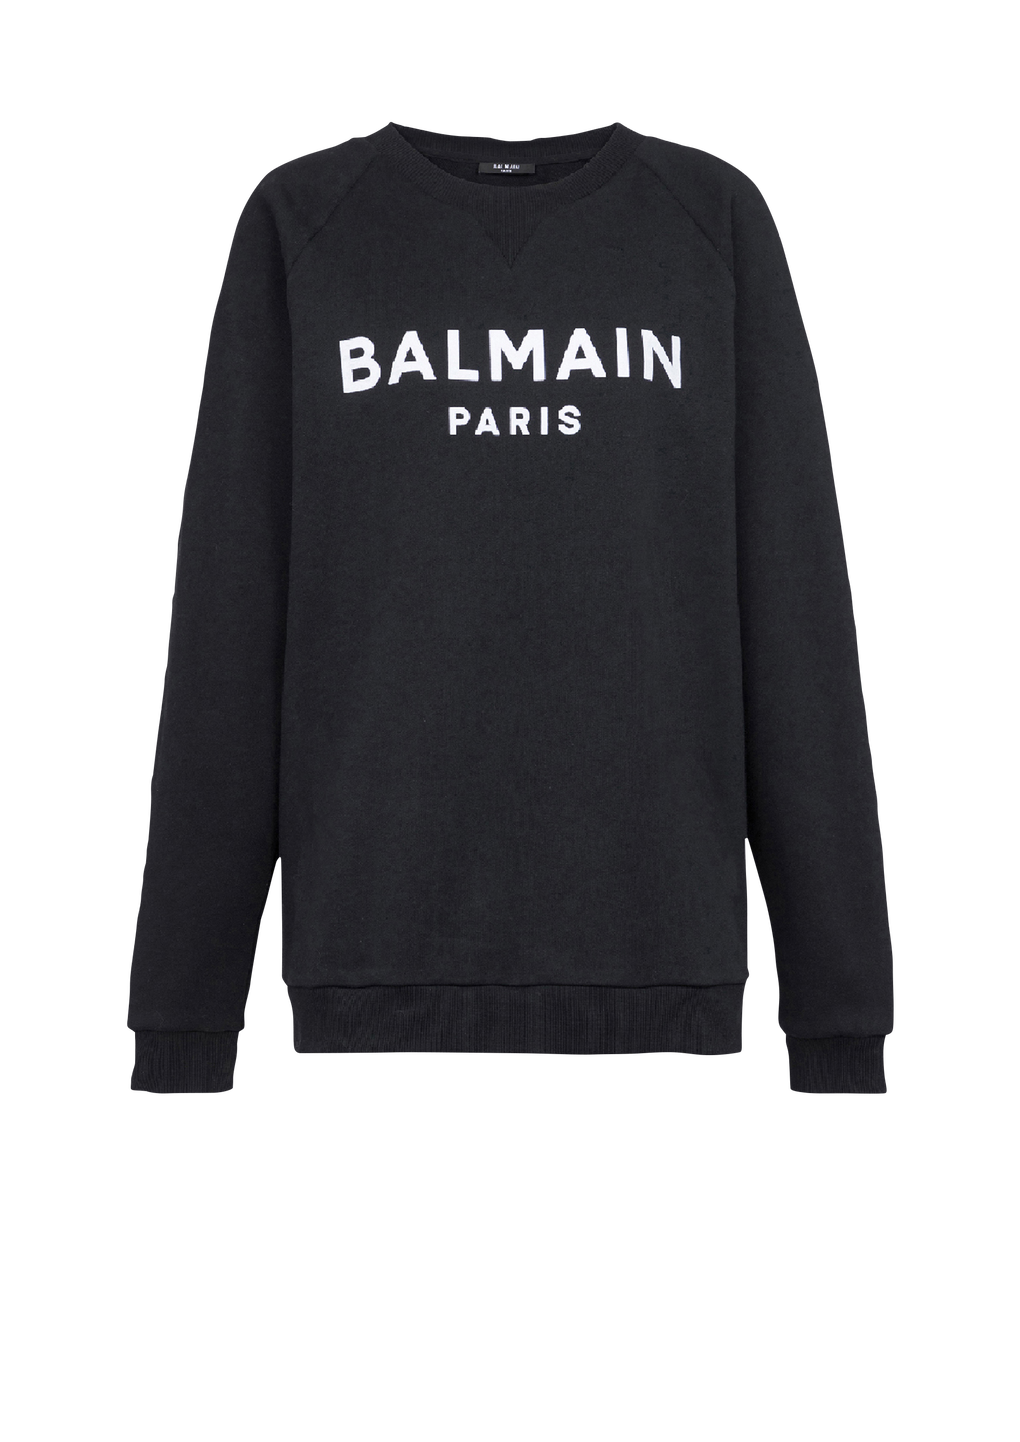 Cotton eco-designed sweatshirt with flocked Balmain logo, black, hi-res